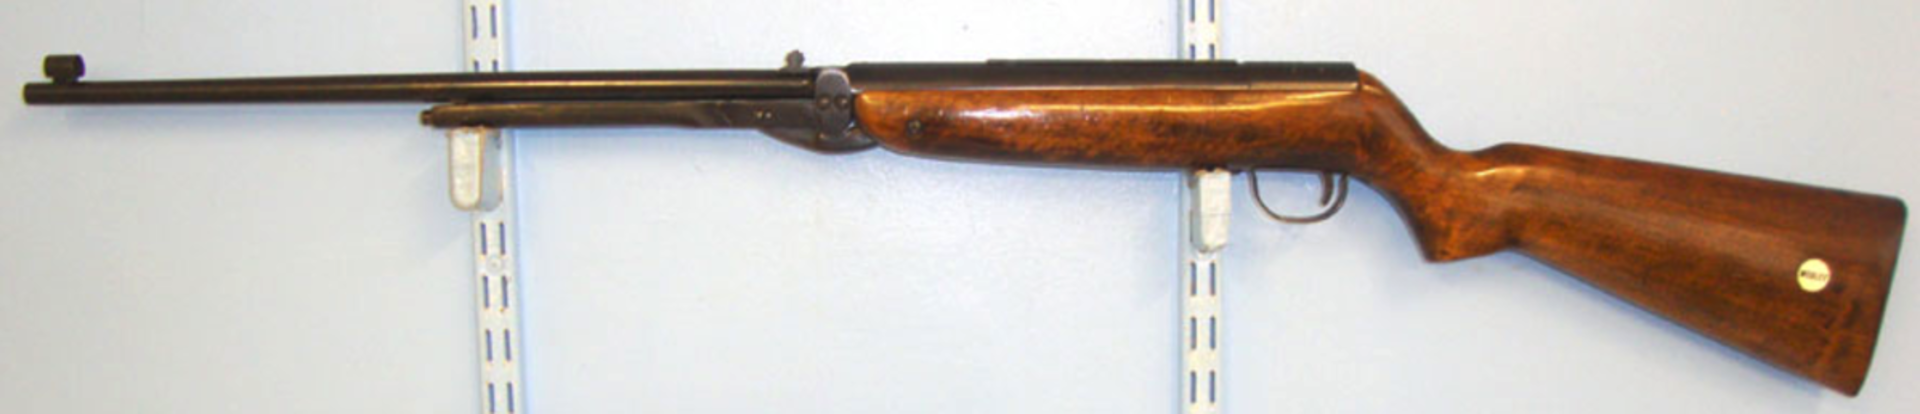 1960’s Webley Mark III .22 Calibre Underlever Air Rifle - Image 2 of 3